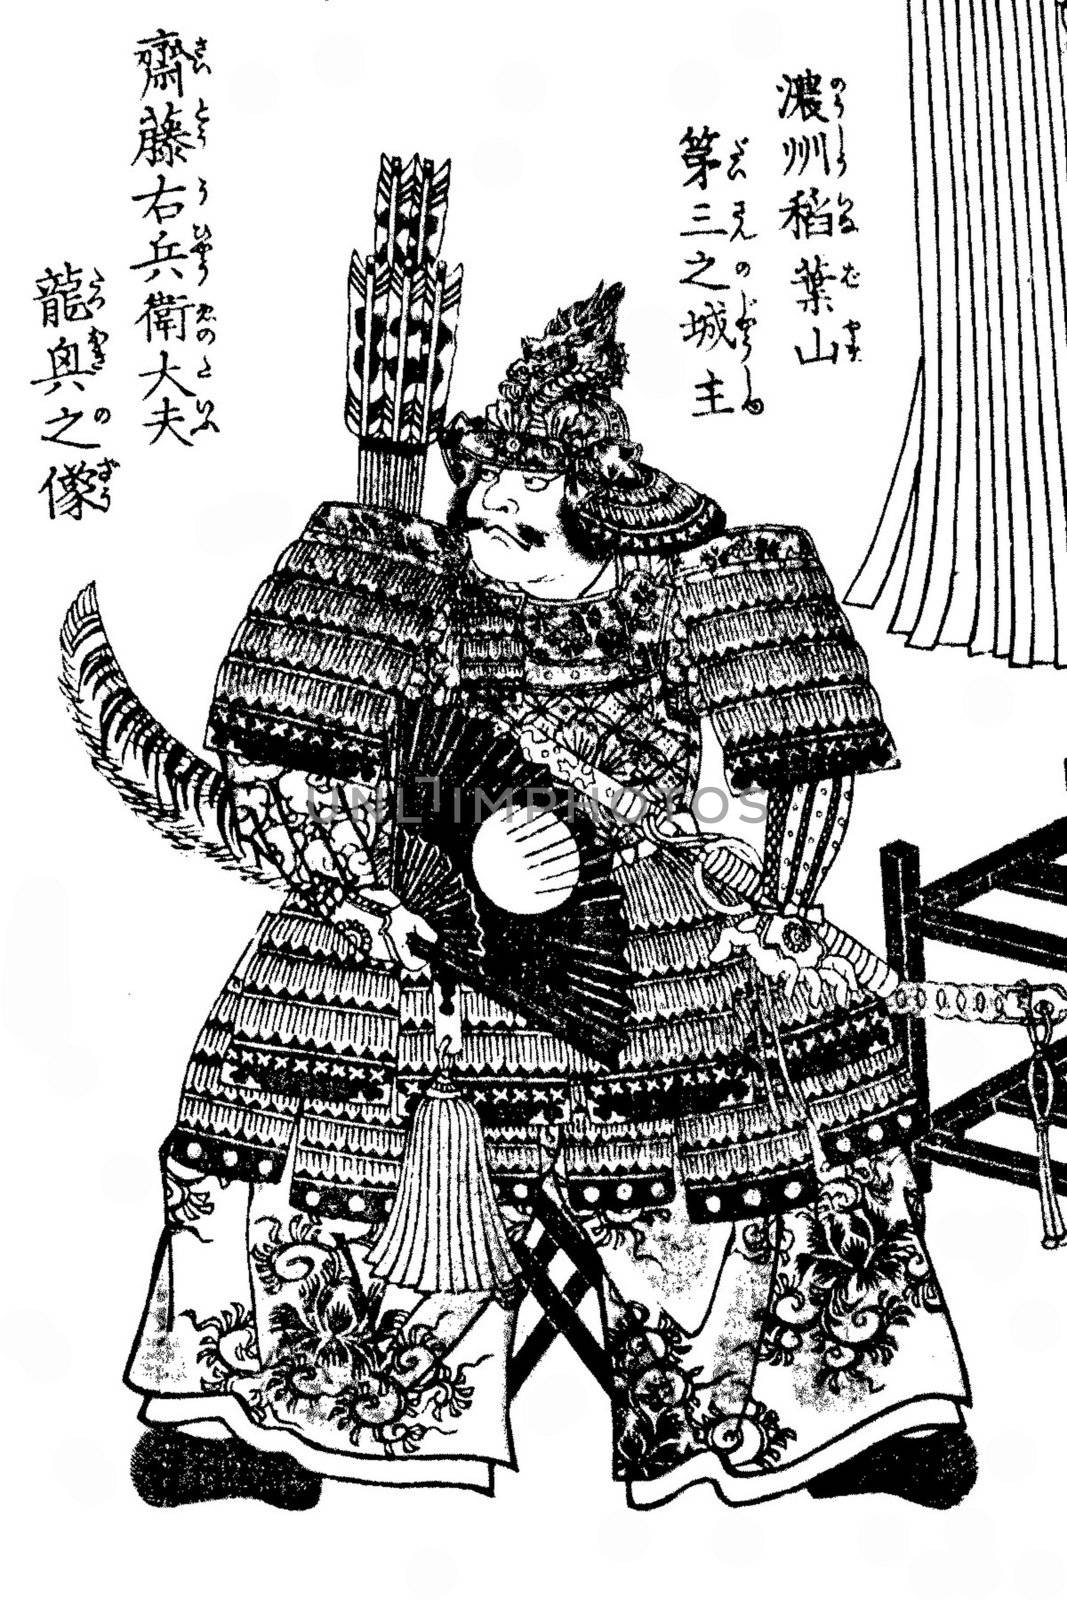 Medieval japanese warrior by Vitamin